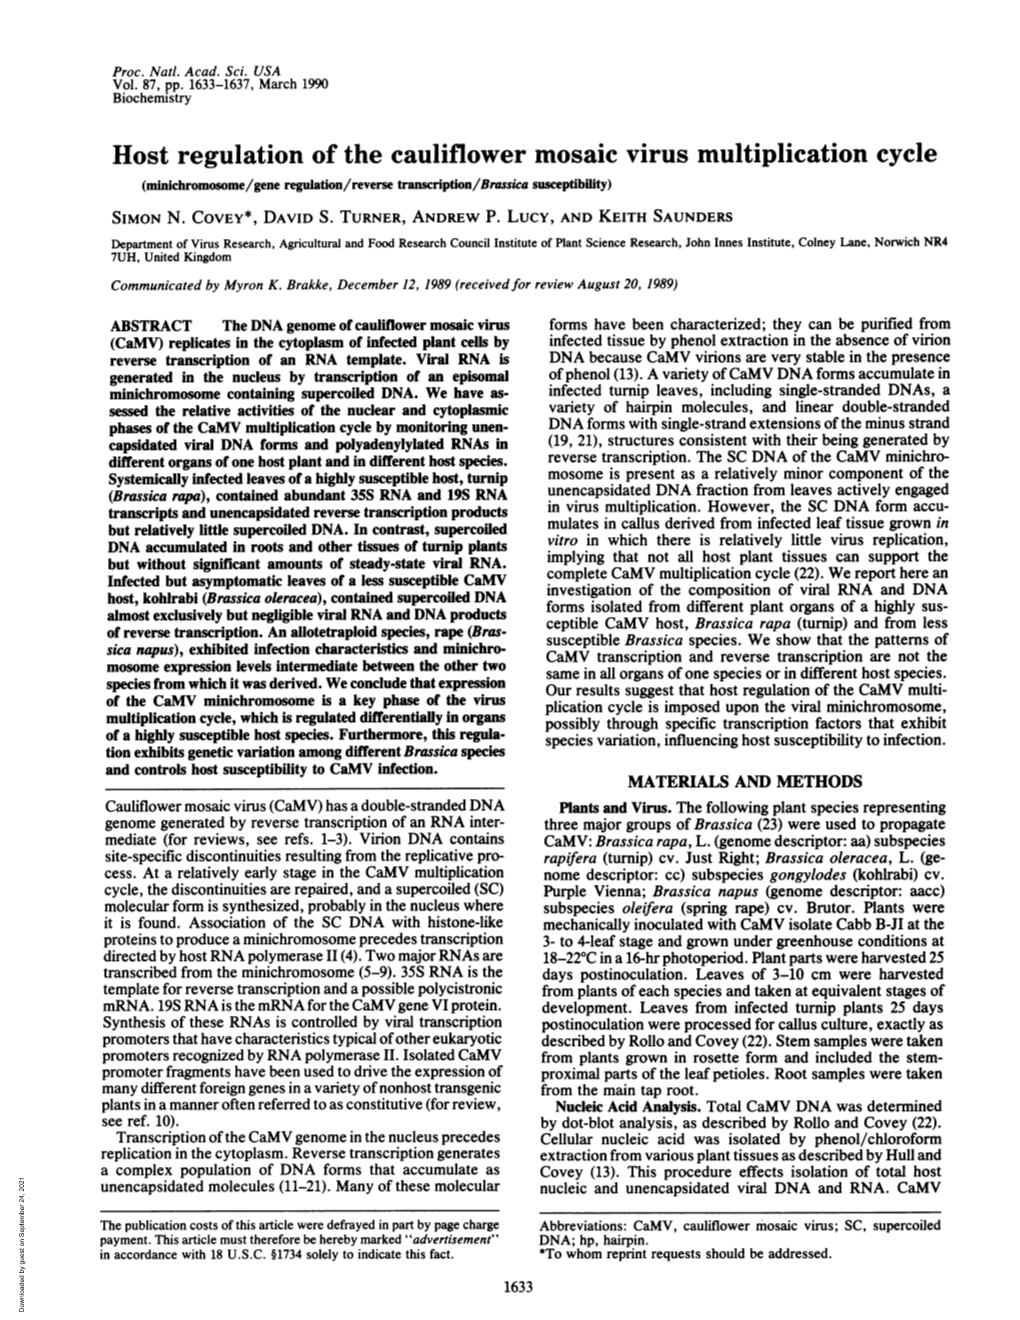 Host Regulation of the Cauliflower Mosaic Virus Multiplication Cycle (Minichromosome/Gene Regulation/Reverse Transcription/Brassica Susceptibility) SIMON N